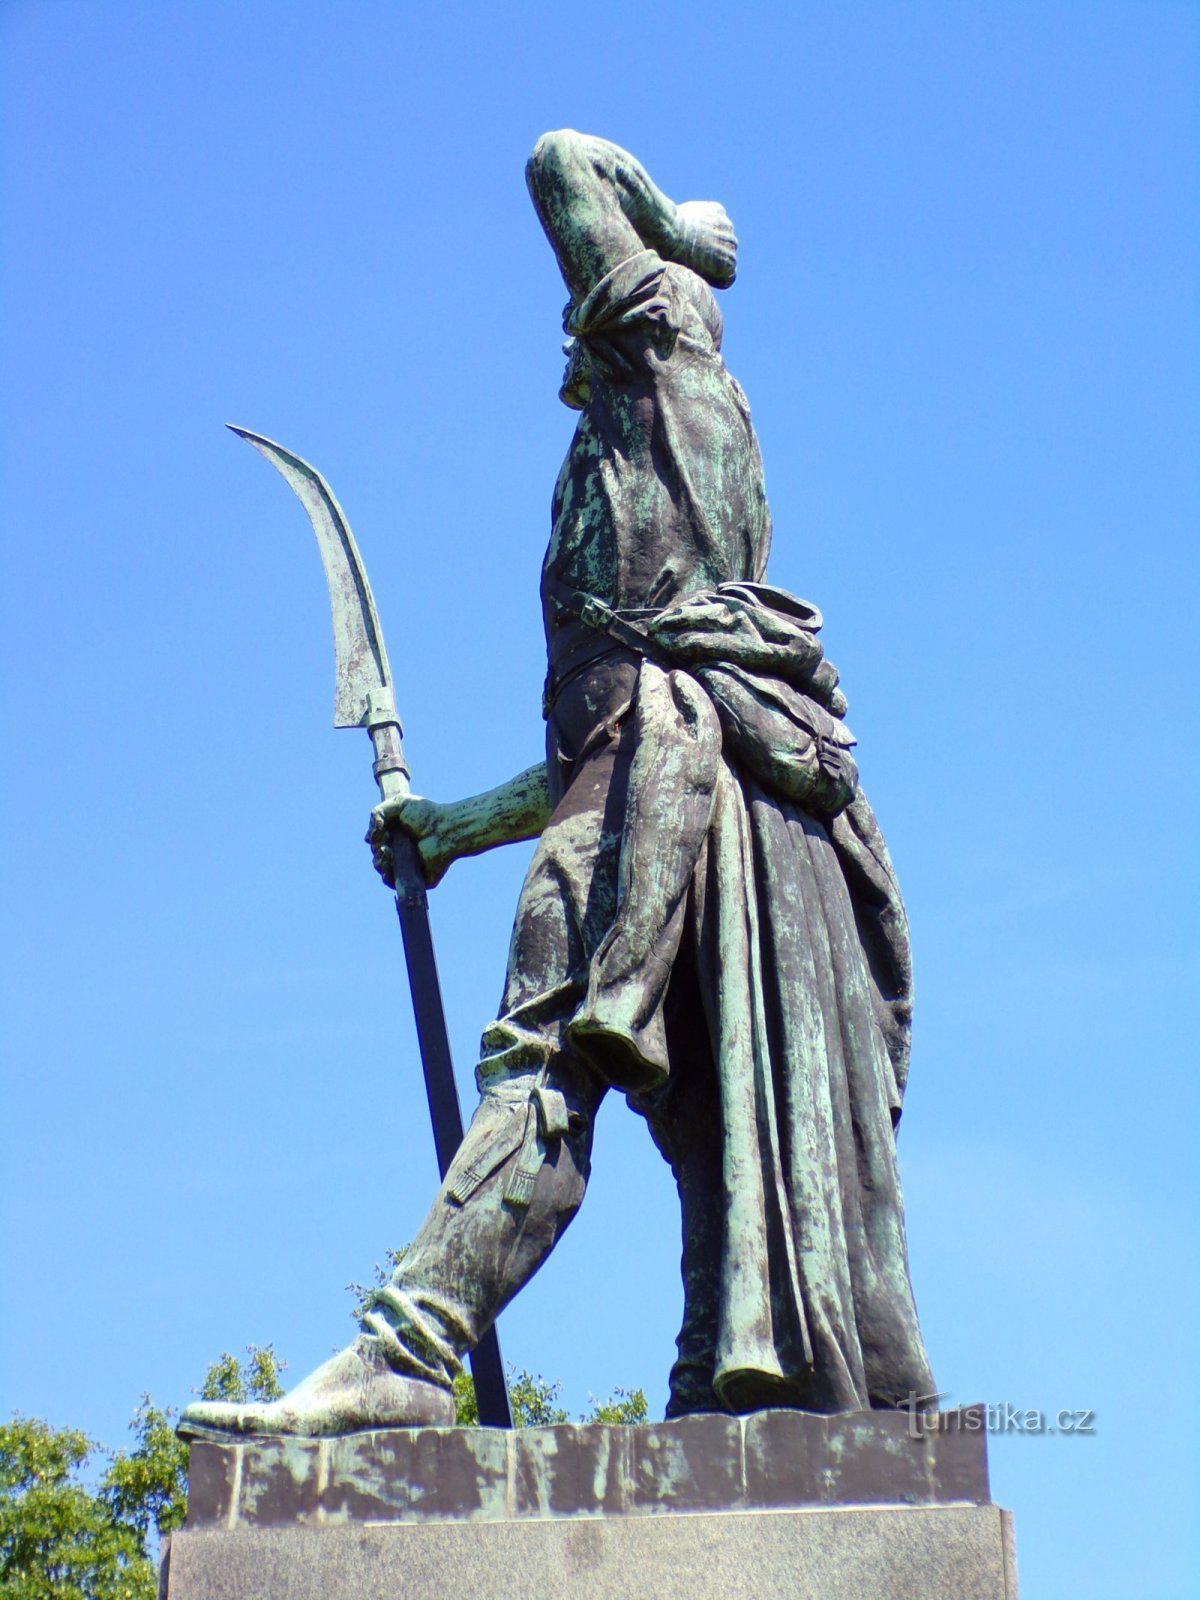 Monument au soulèvement paysan de 1775 (Chlumec nad Cidlinou, 5.6.2022 juillet XNUMX)